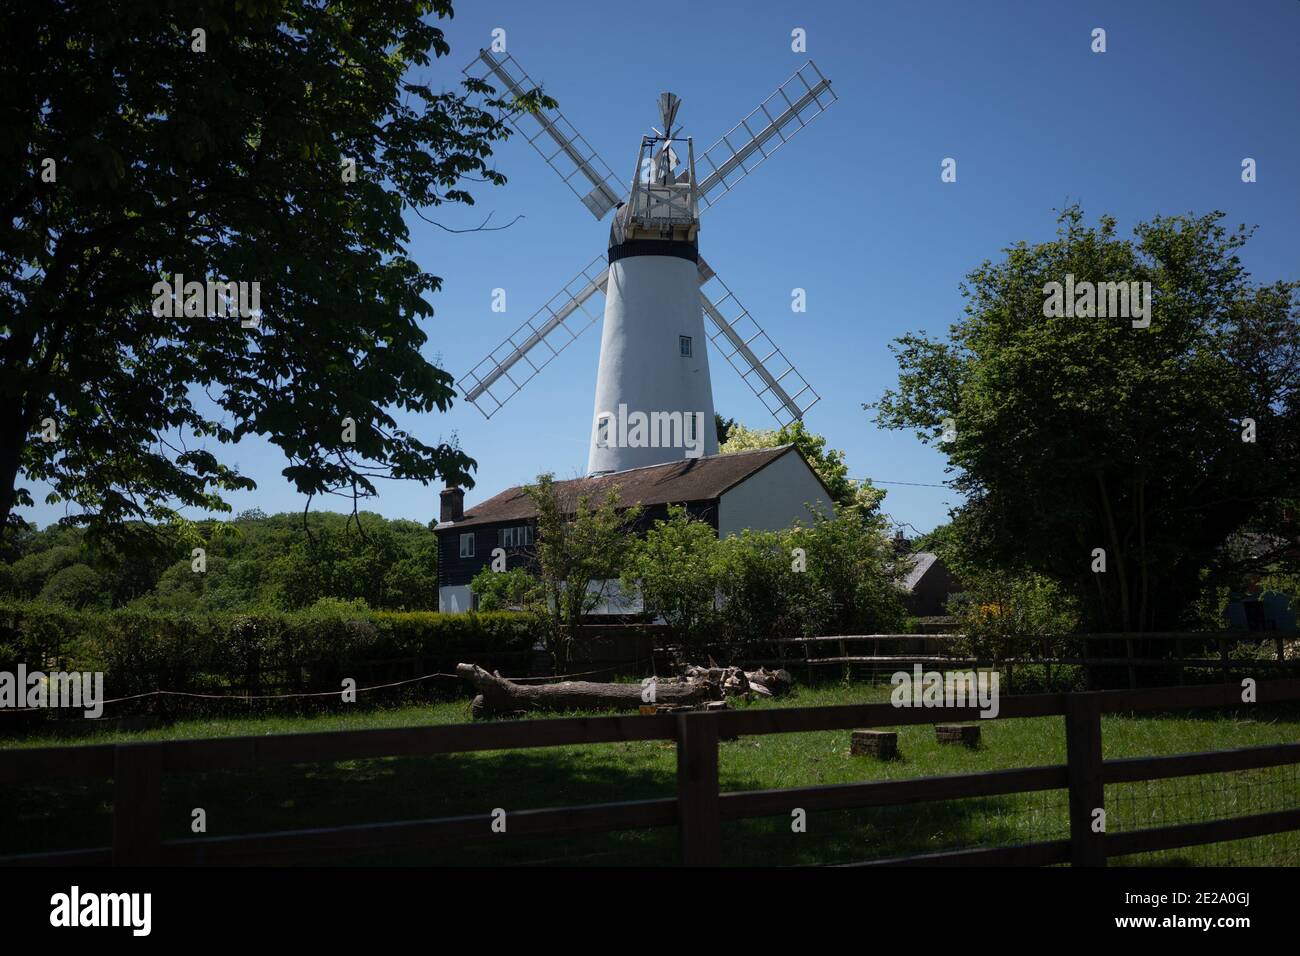 The Hawridge Windmill, also known as the Cholesbury Windmill is seen in Cholesbury, Buckinghamshire, UK Stock Photo